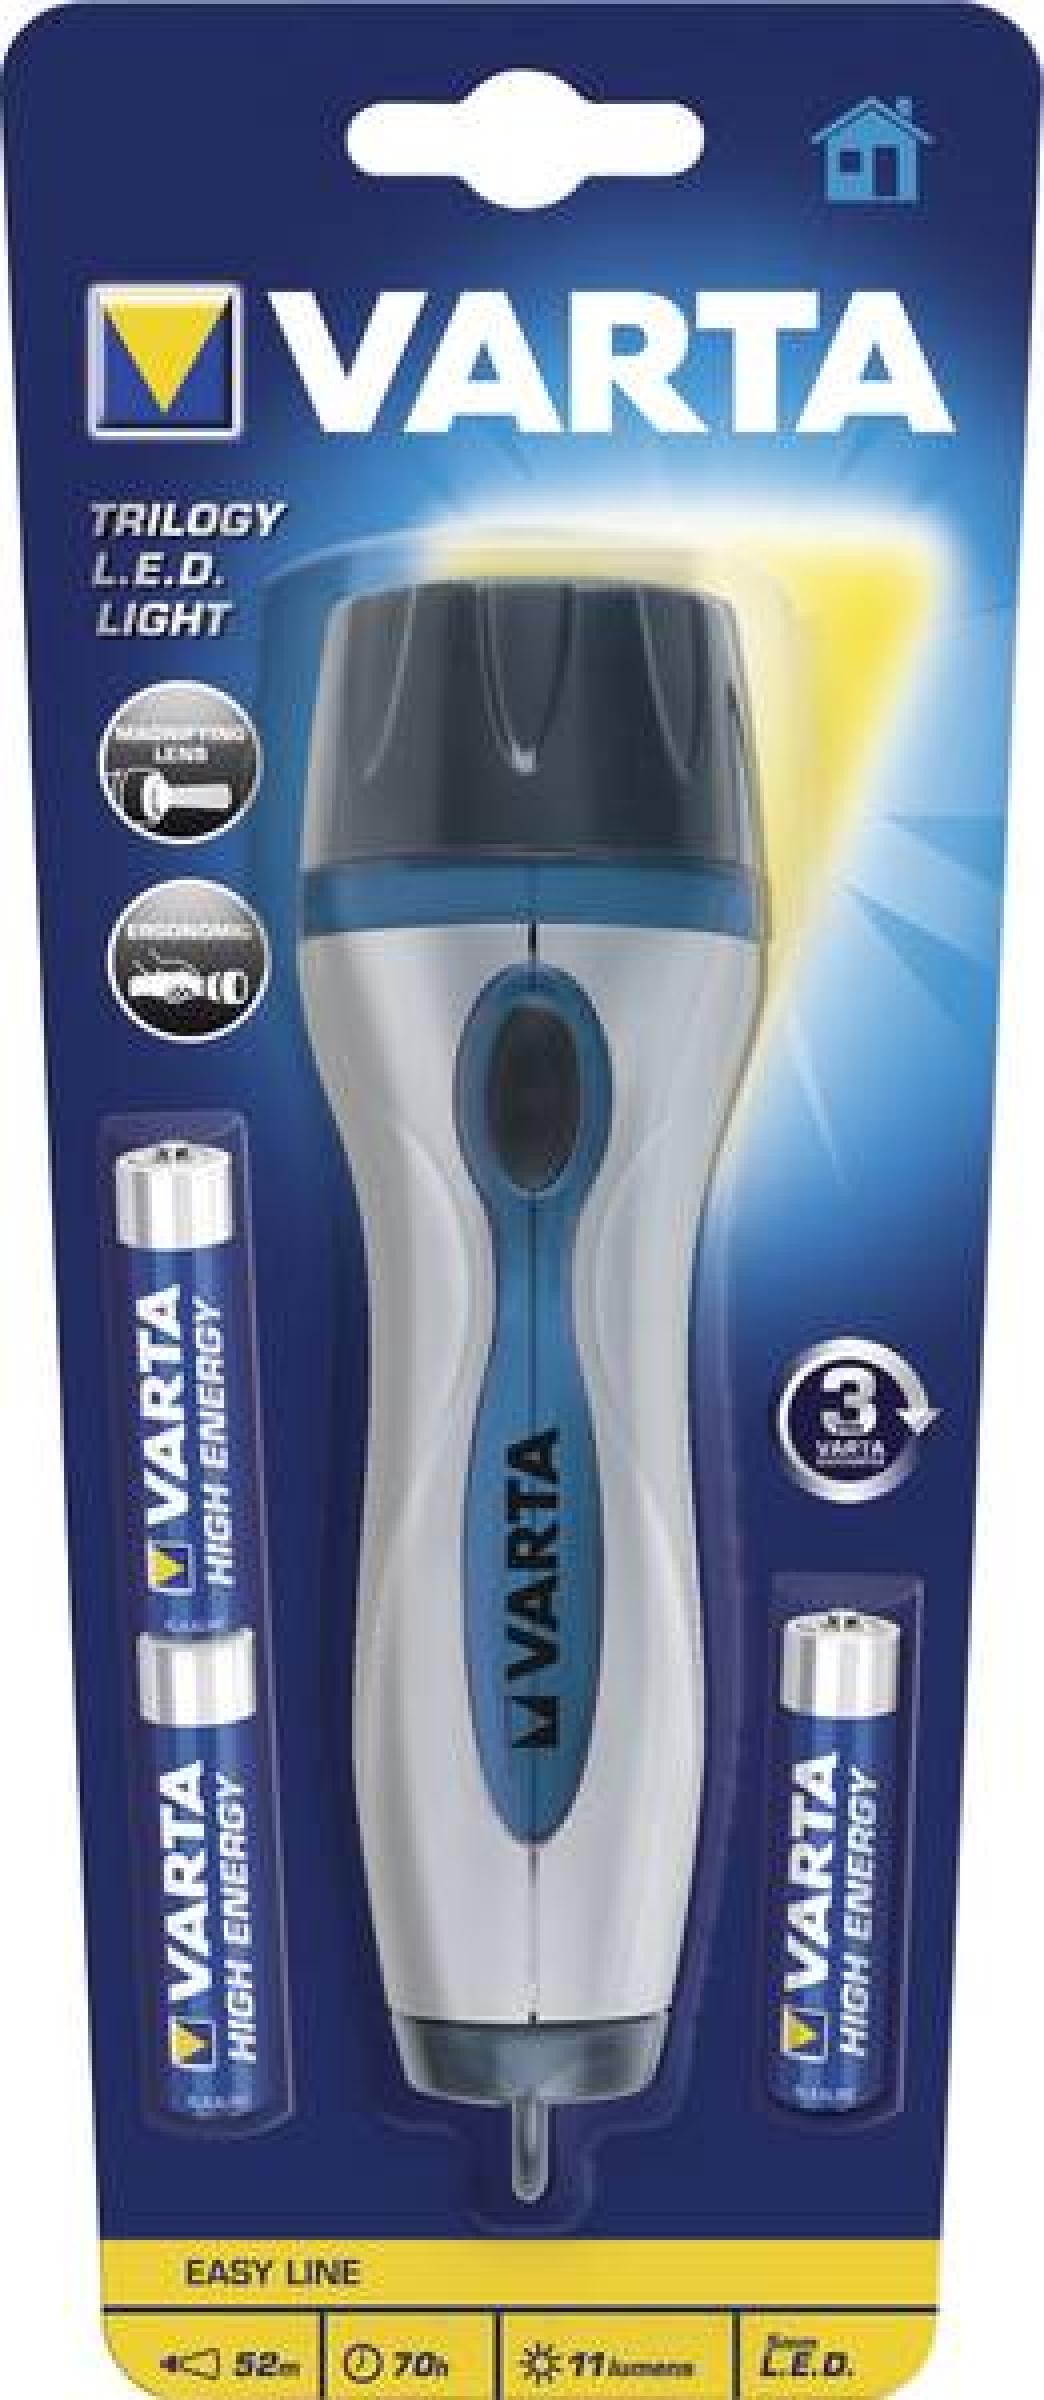 Varta Trilogy LED Light 3AAA incl. Batteries